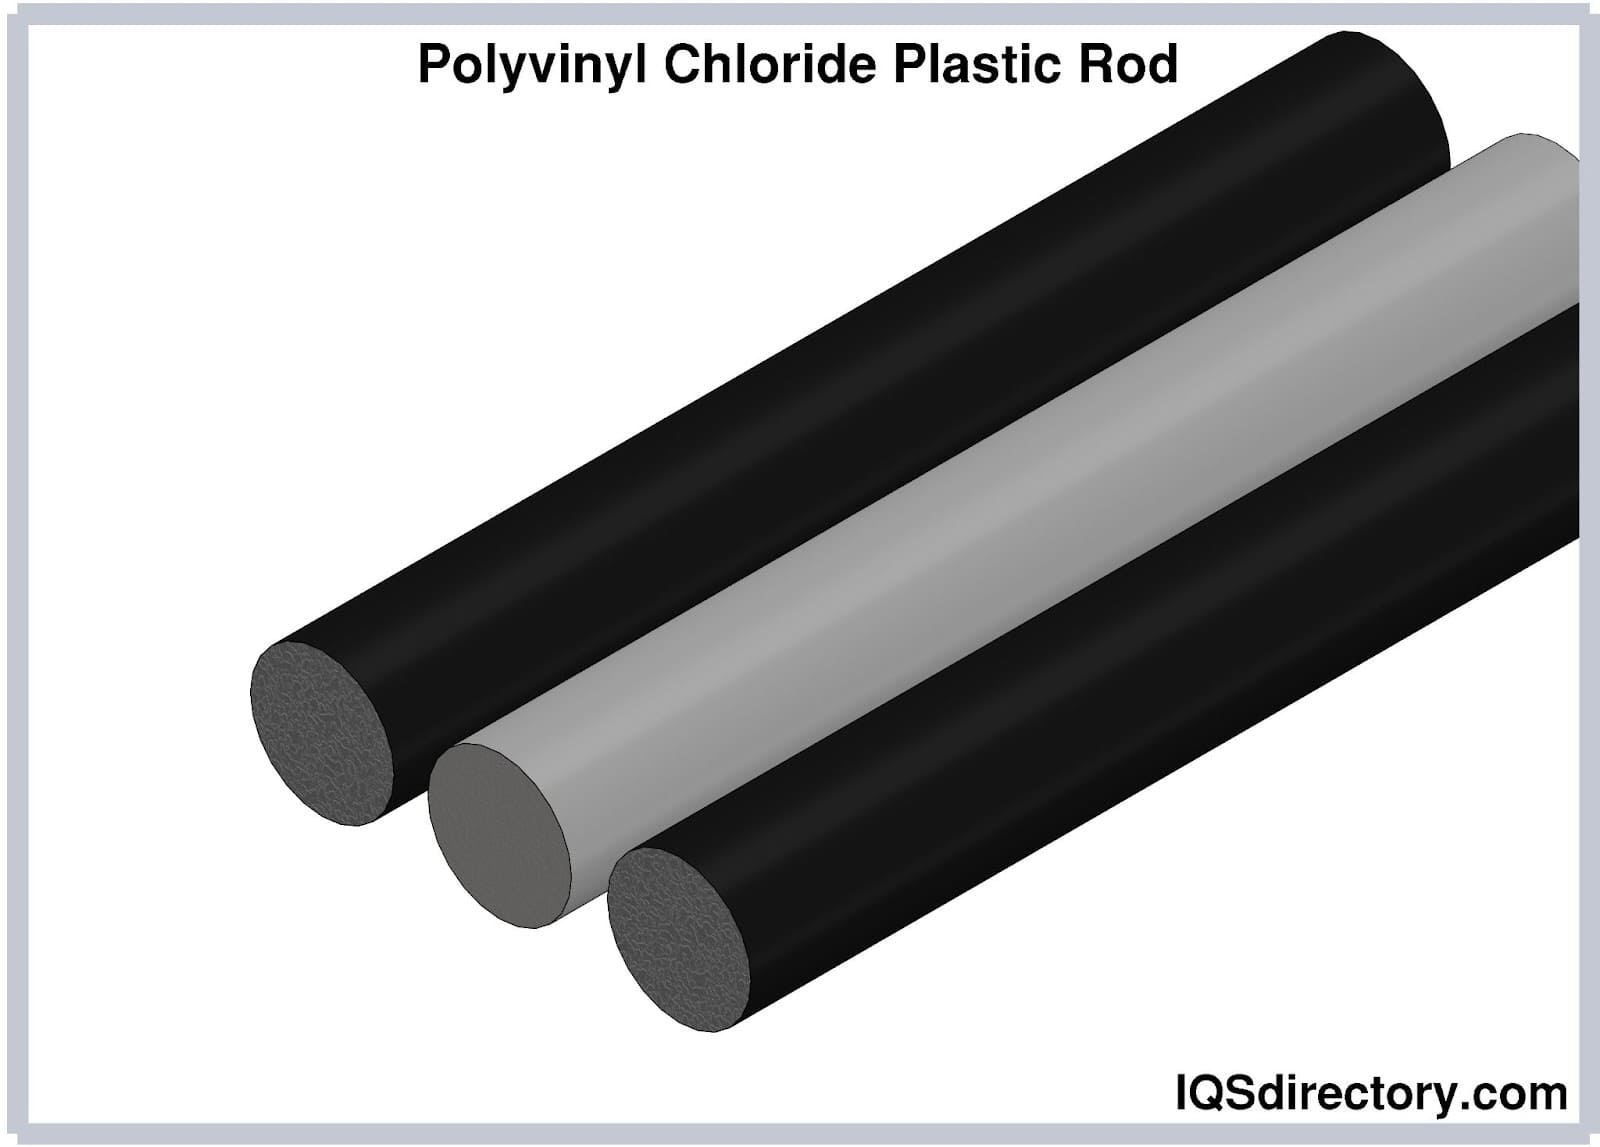 Polyvinyl Chloride Plastic Rod